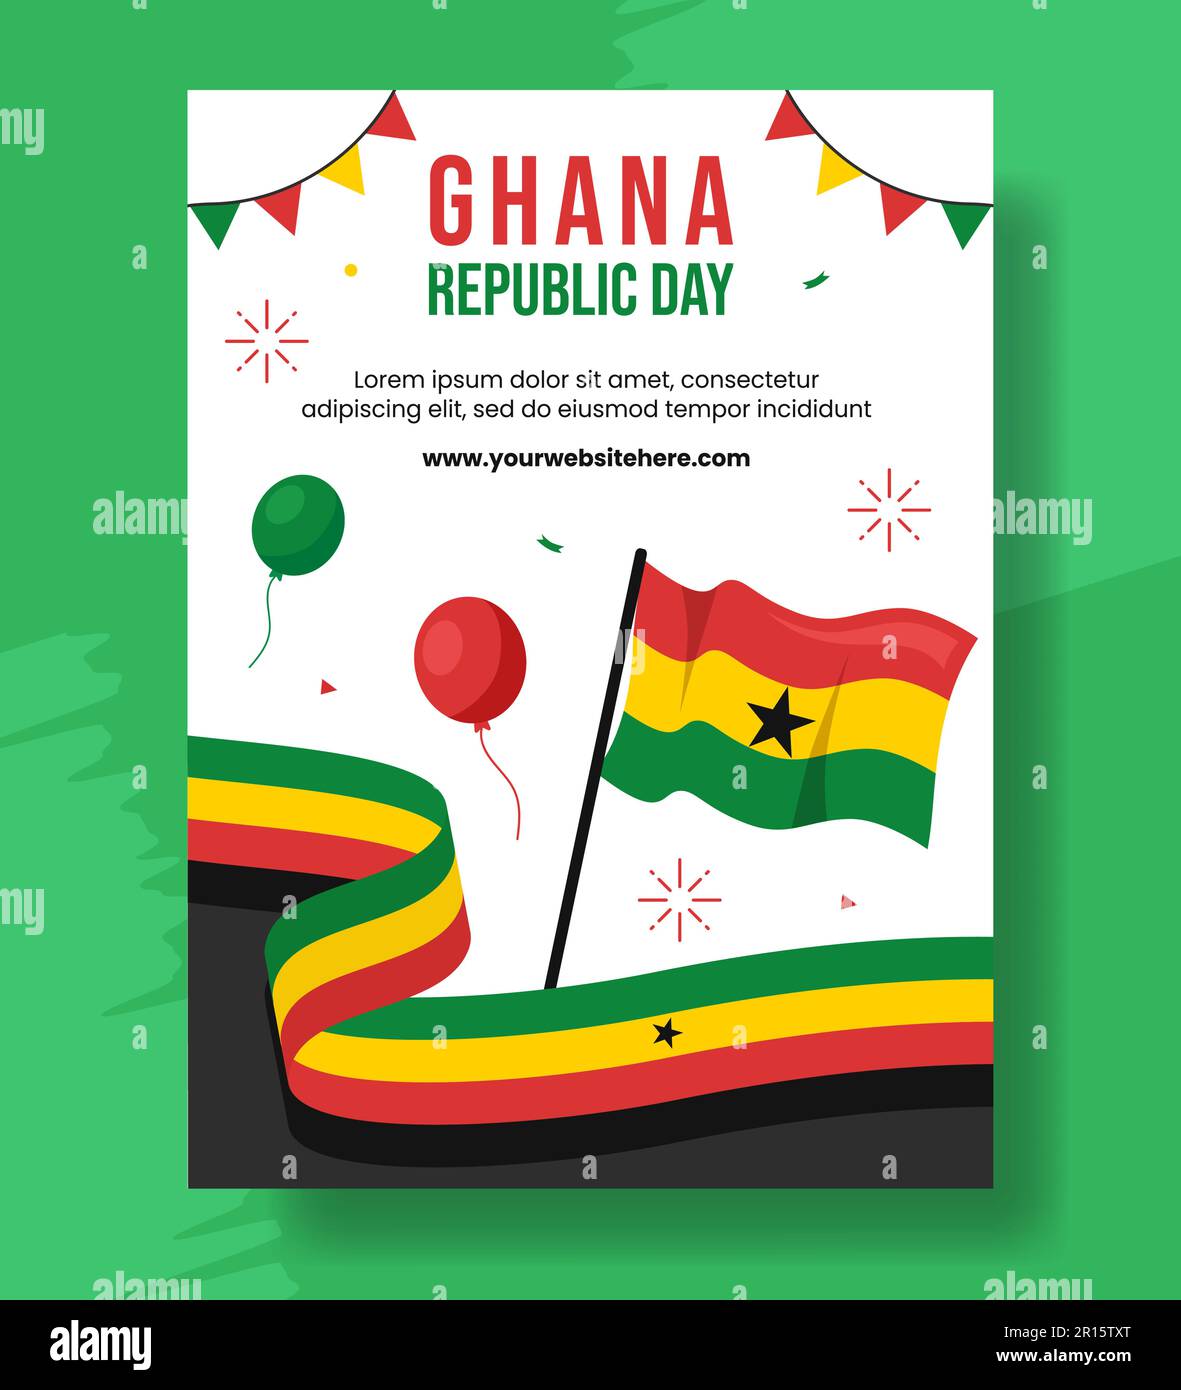 Ghana Republic Day Vertical Poster Flat Cartoon Hand Drawn Templates Background Illustration Stock Vector